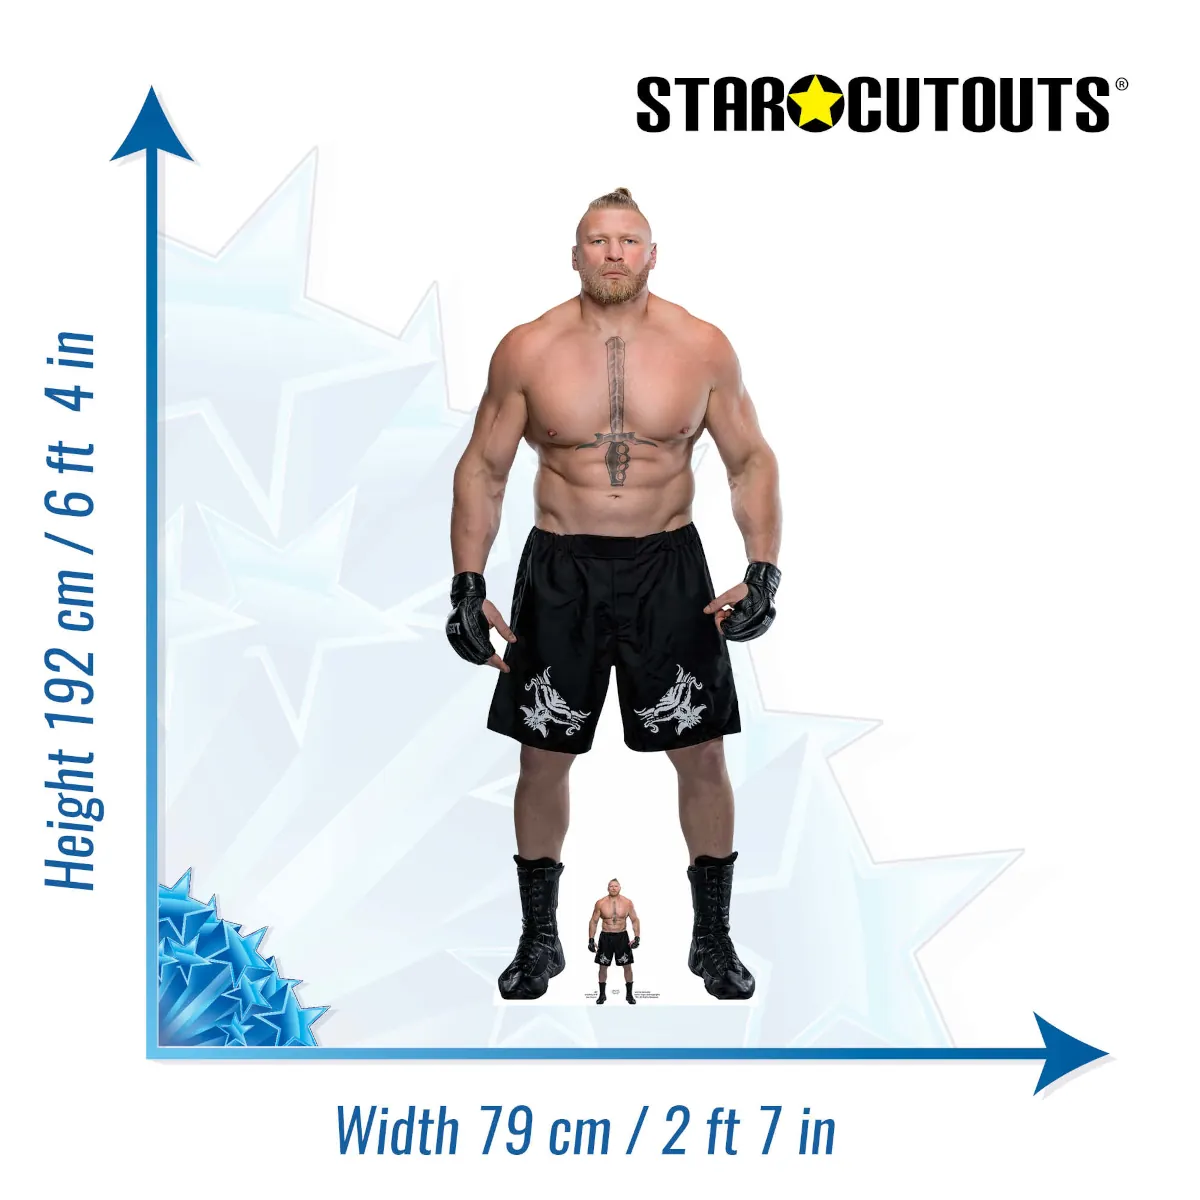 SC4101 Brock Lesnar (WWE) Official Lifesize + Mini Cardboard Cutout Standee Size